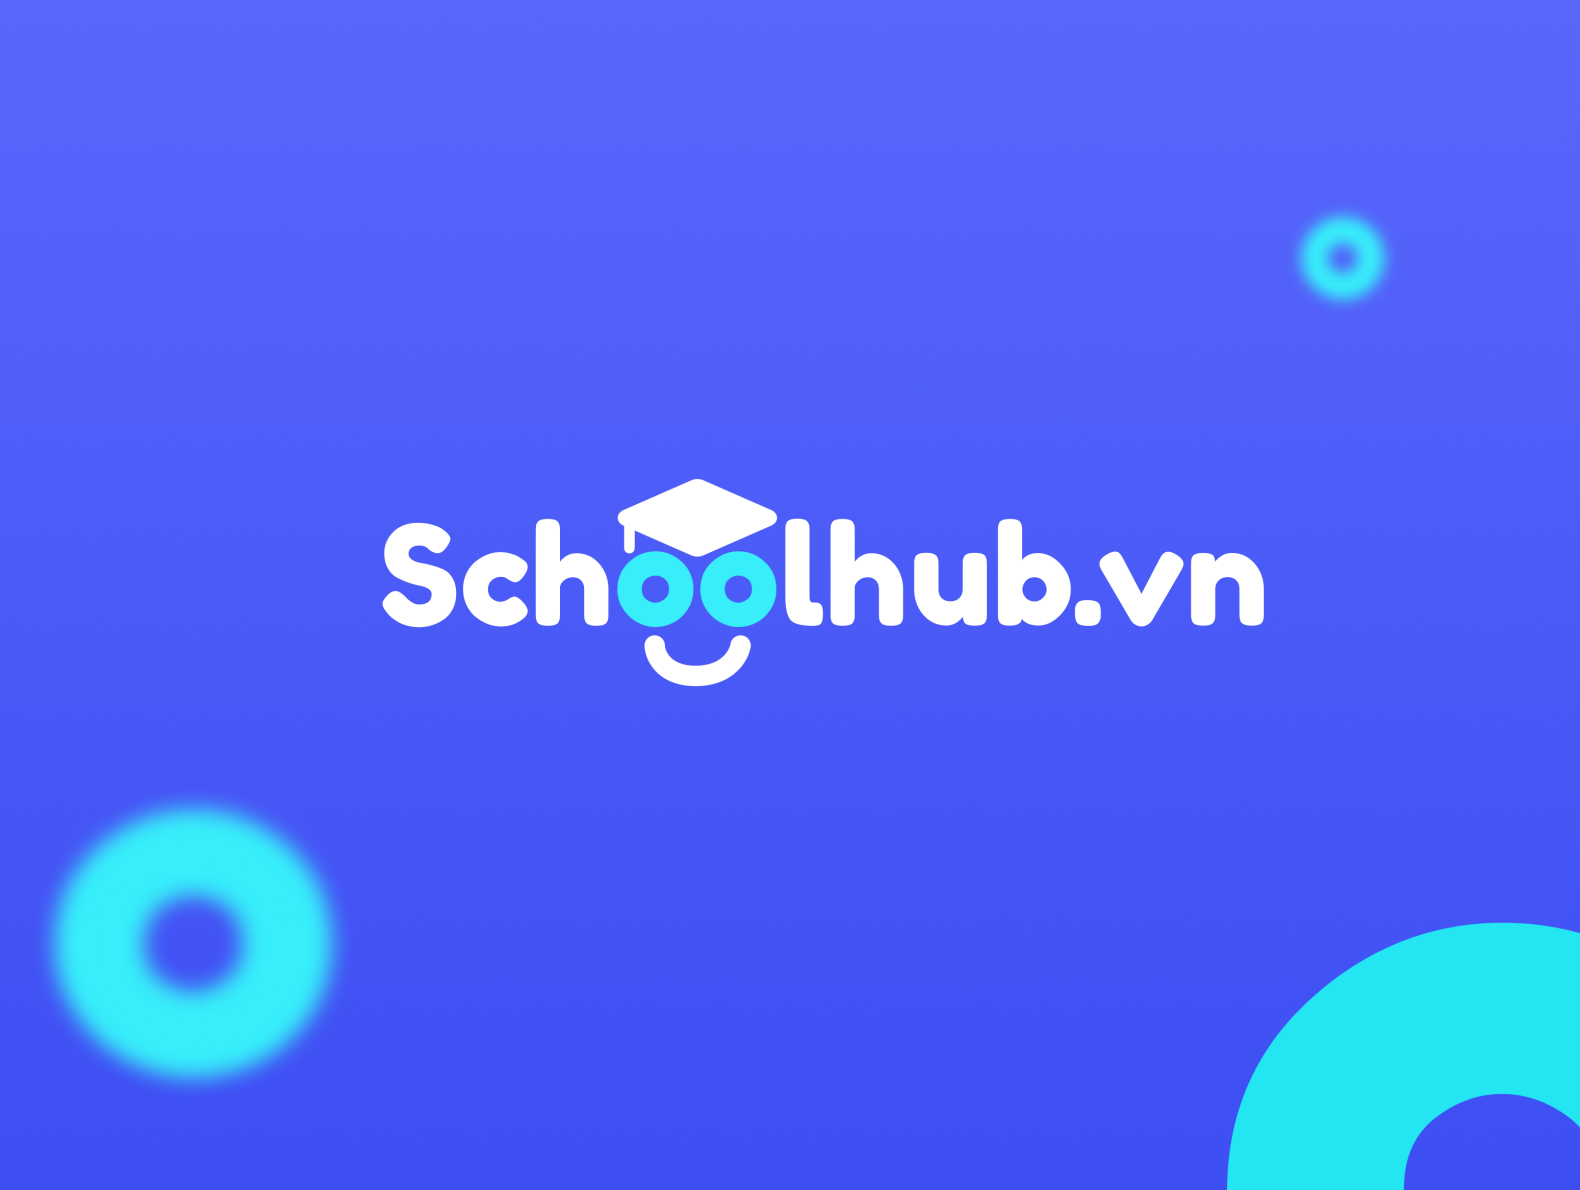 Shoolhub Logo by Widii Studio on Dribbble